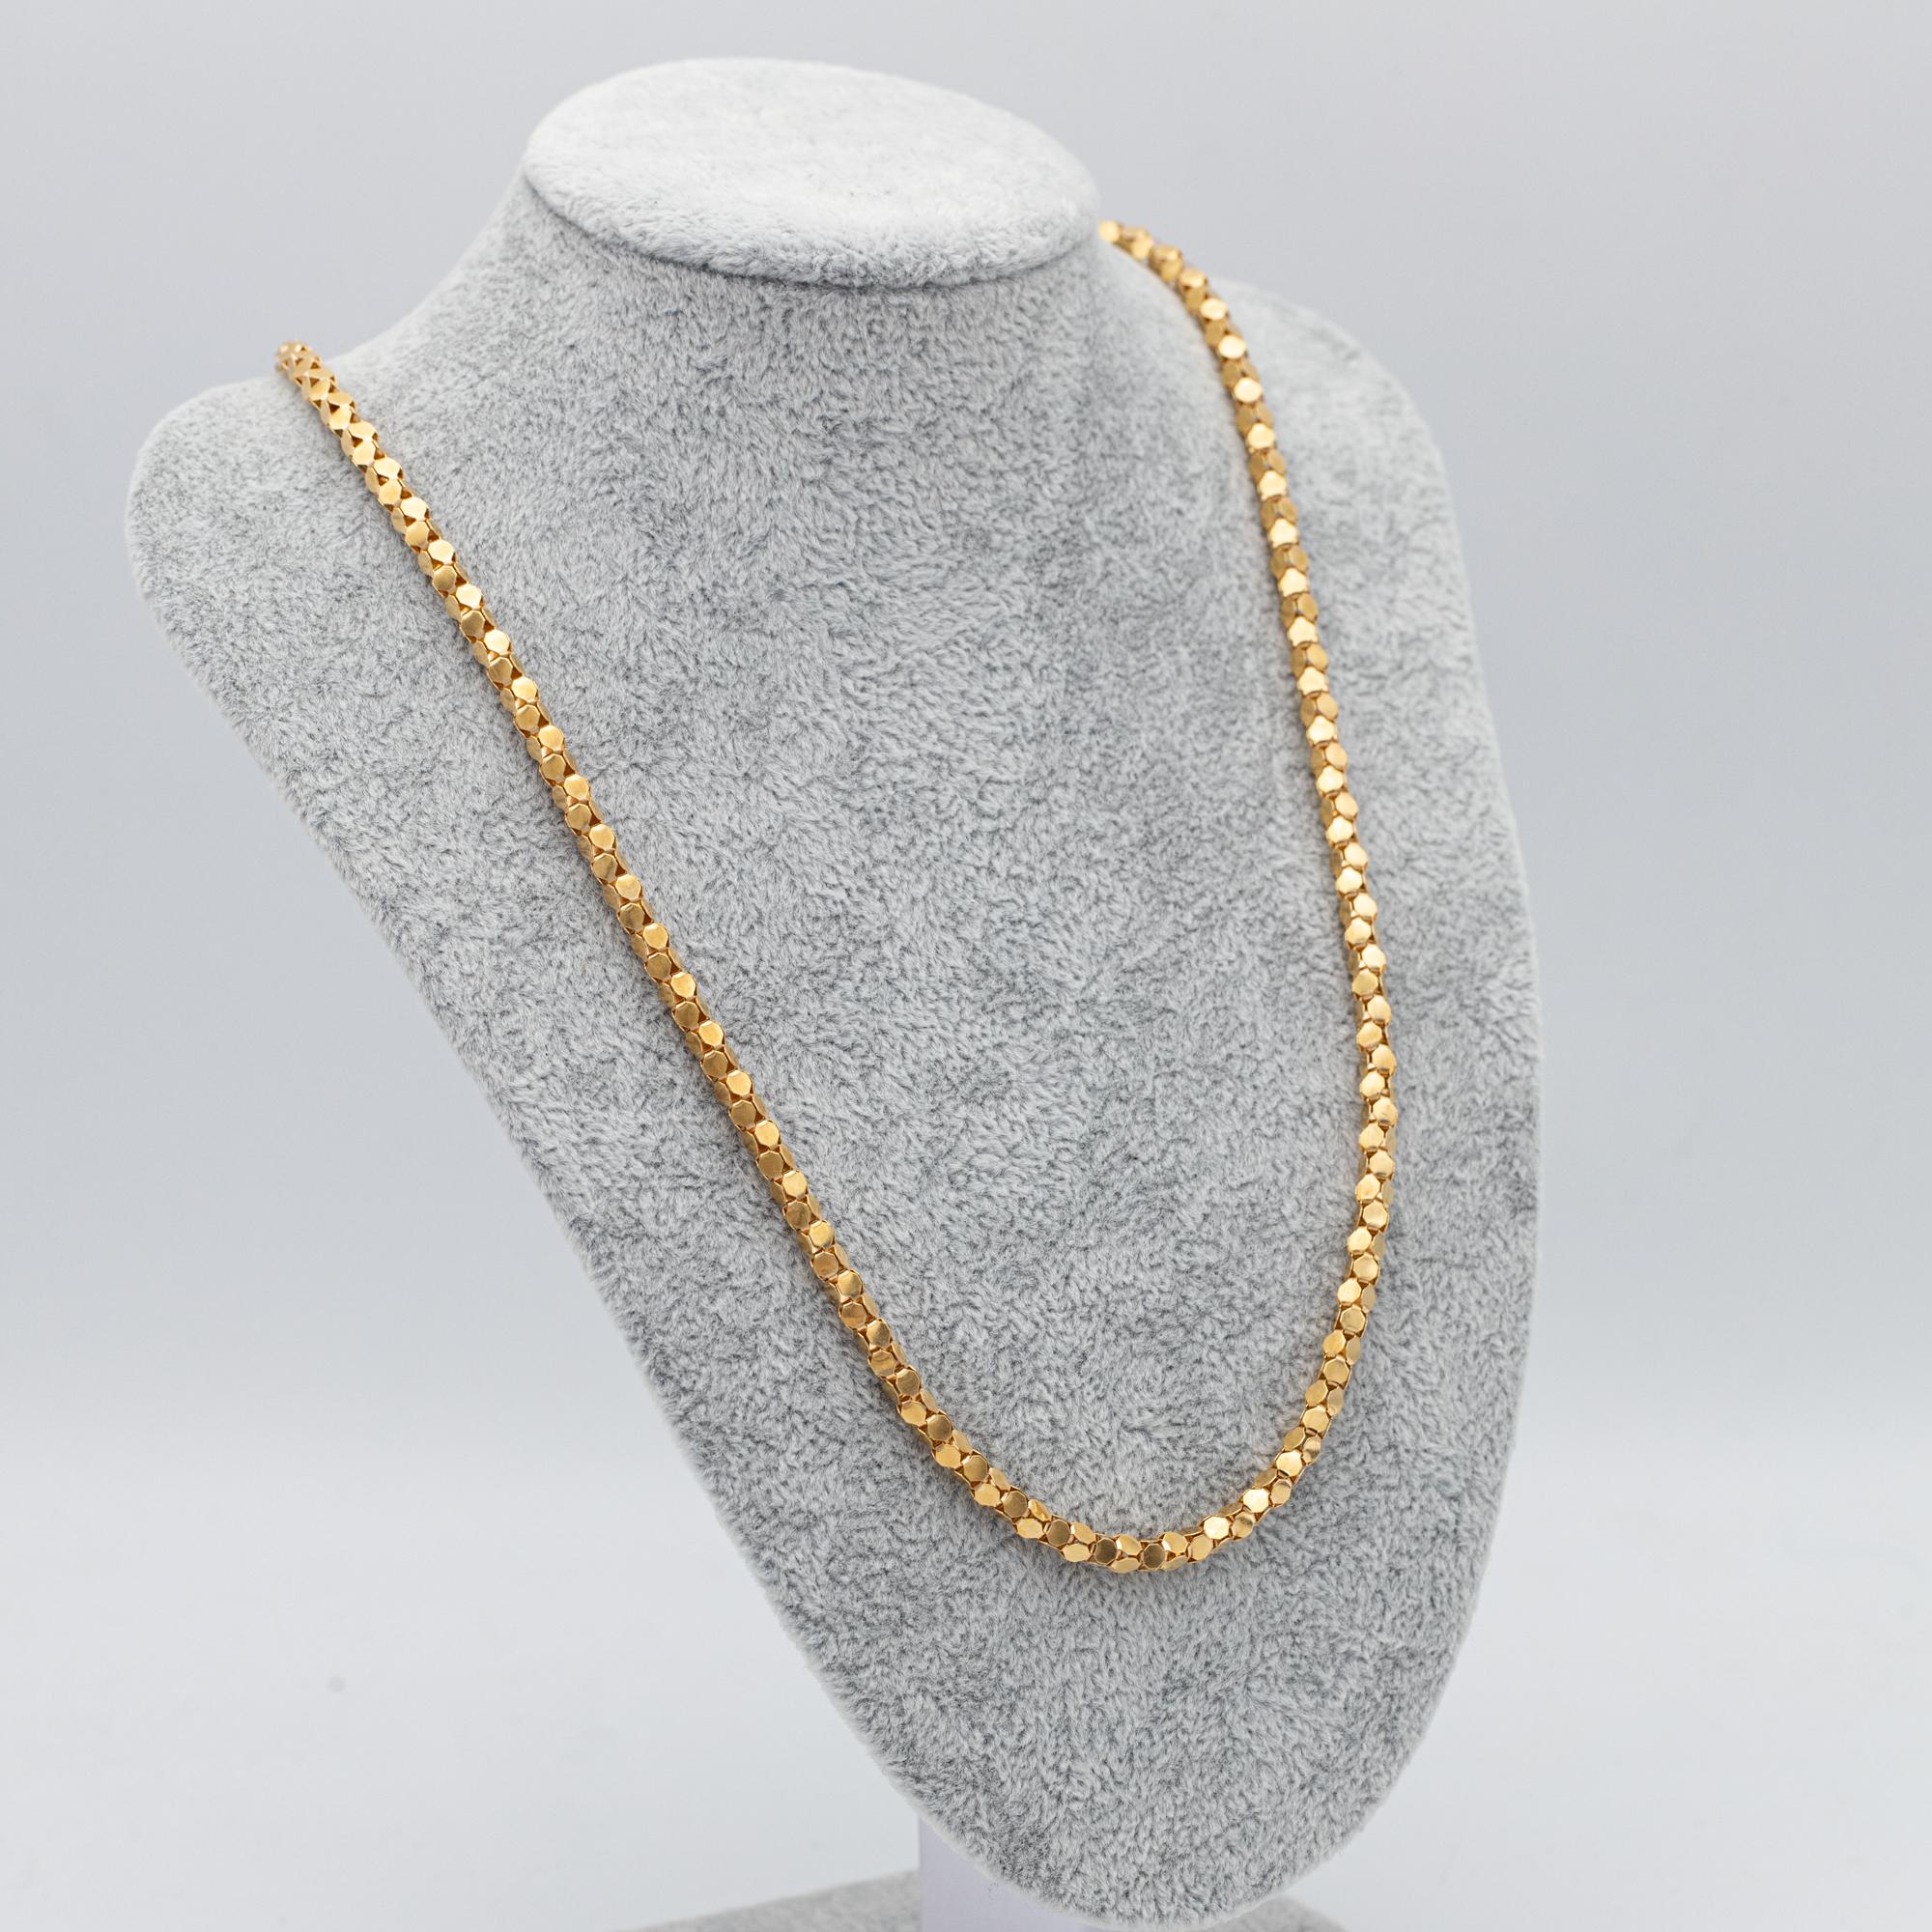 Women's or Men's 18k solid gold Retro popcorn chain - Italian 1960's necklace - 63.5 cm - 25 inch For Sale